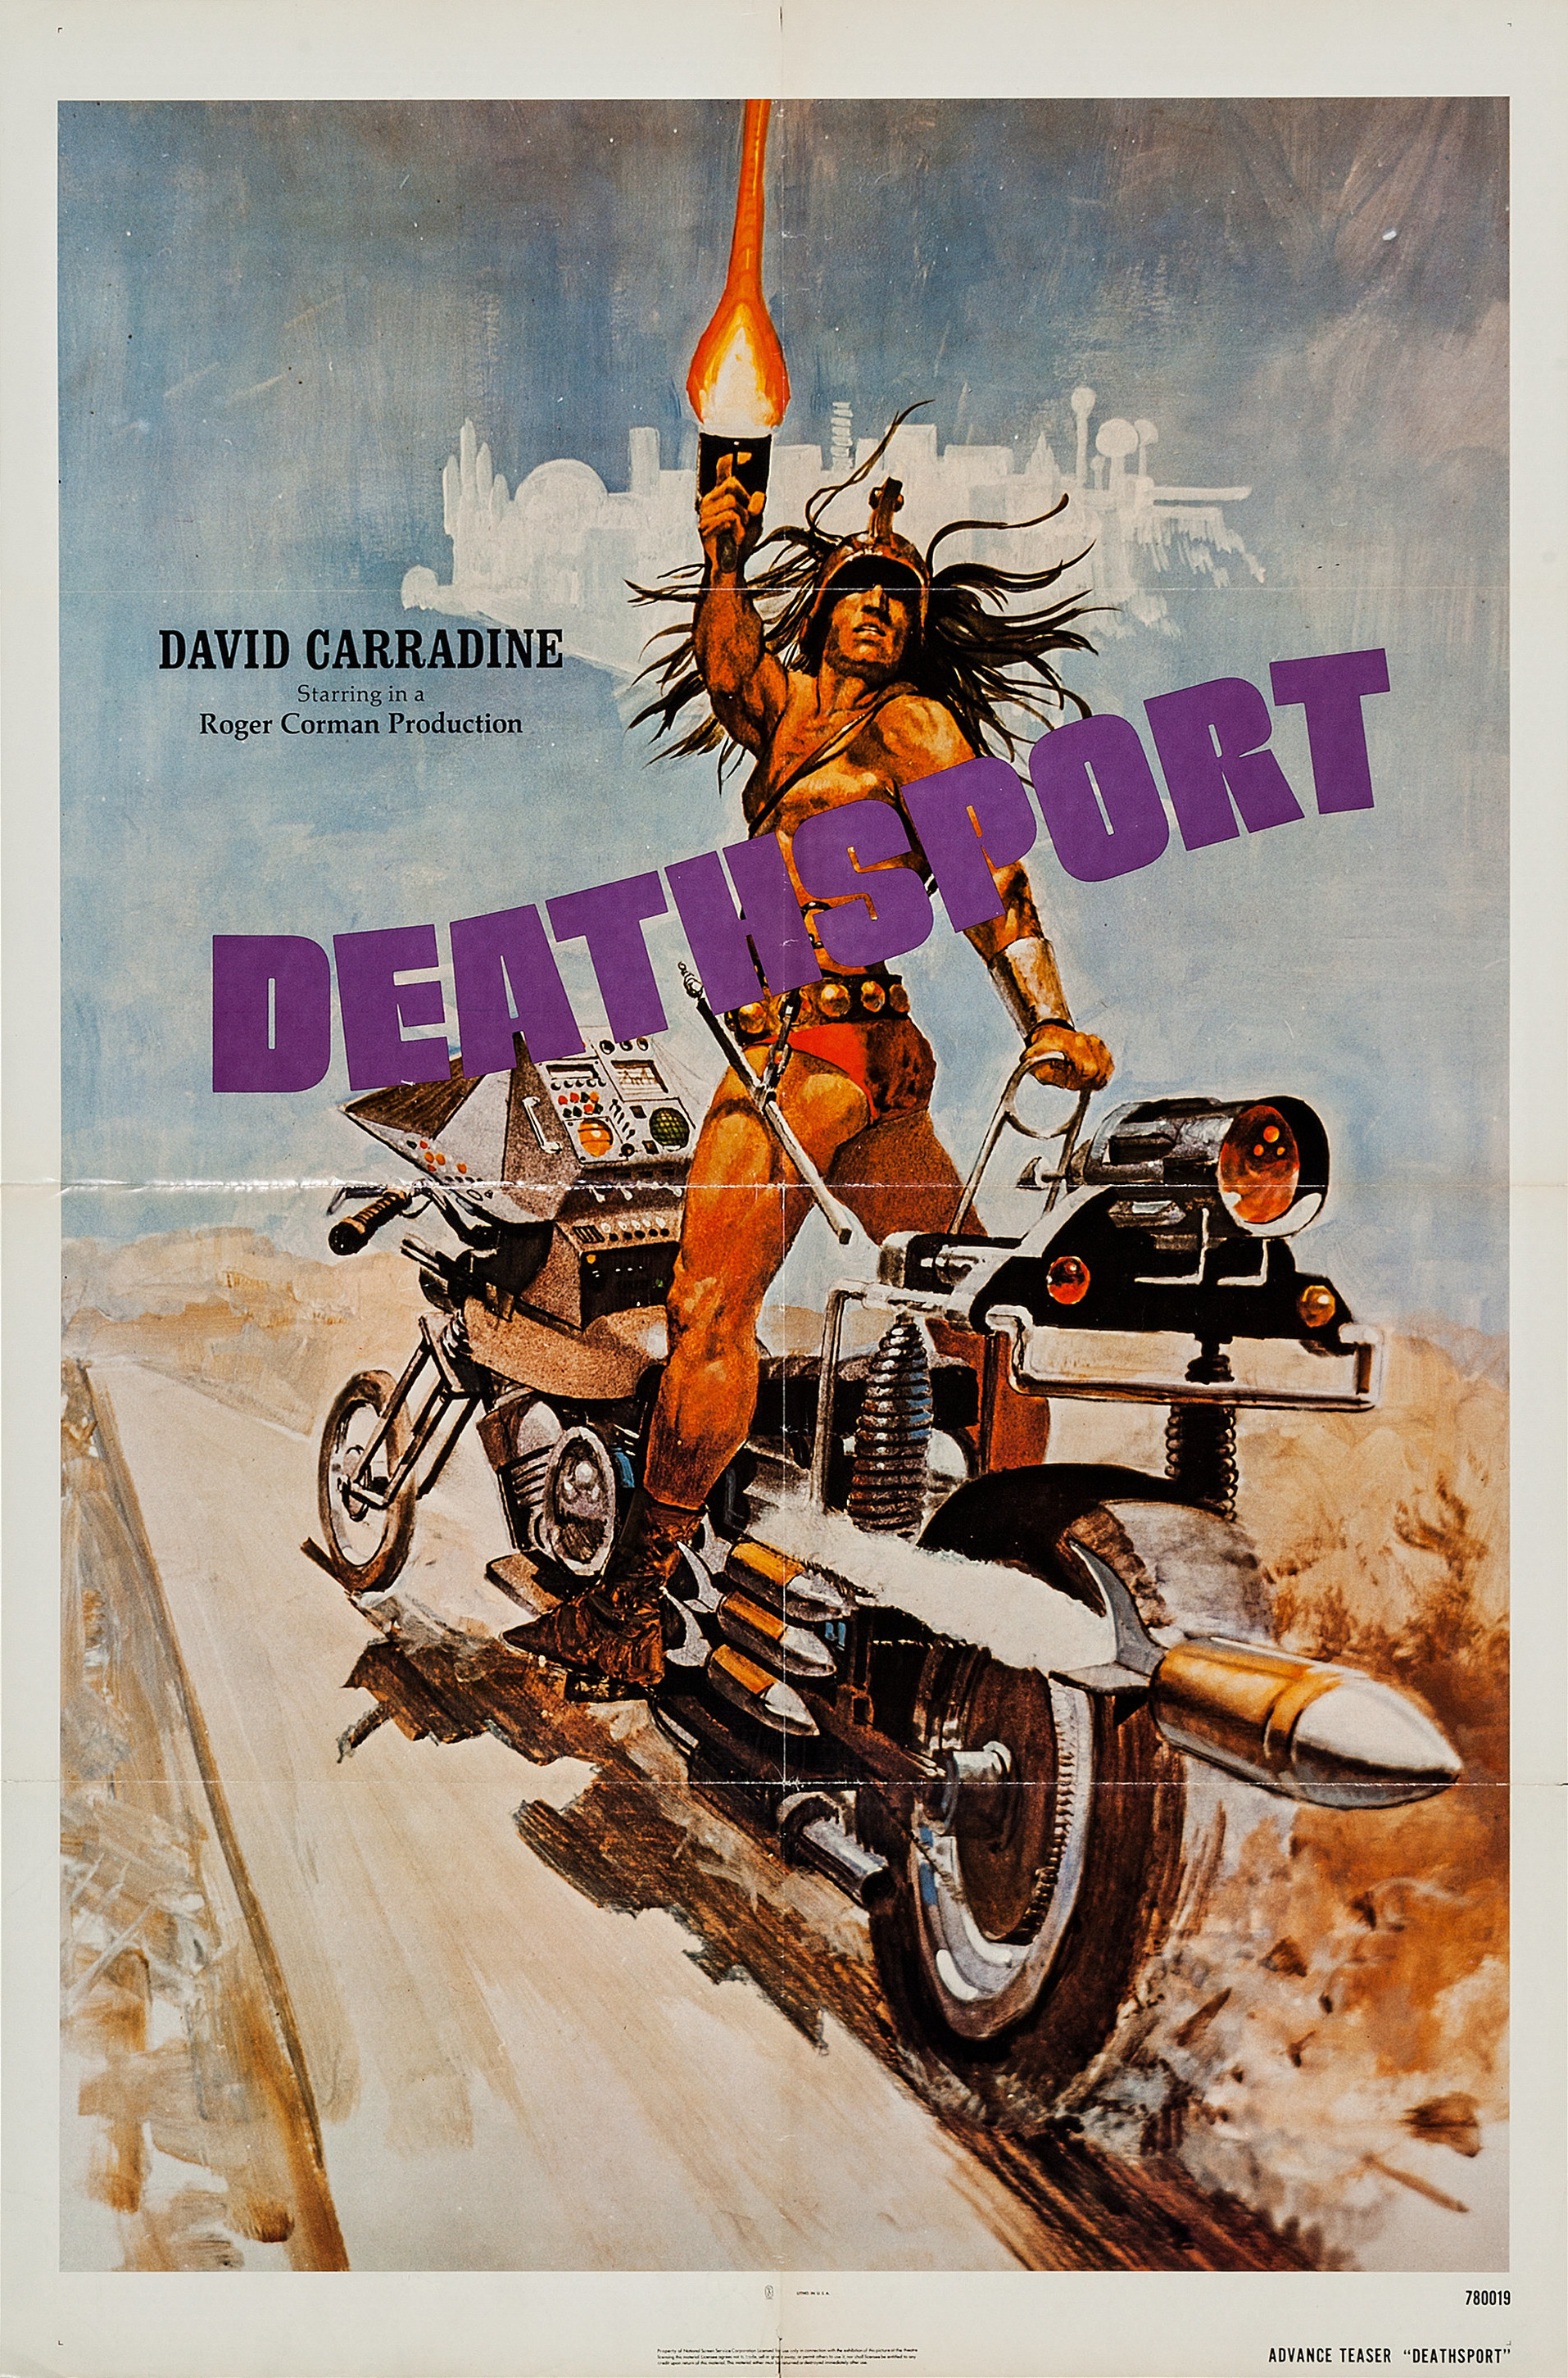 Mega Sized Movie Poster Image for Deathsport (#1 of 3)